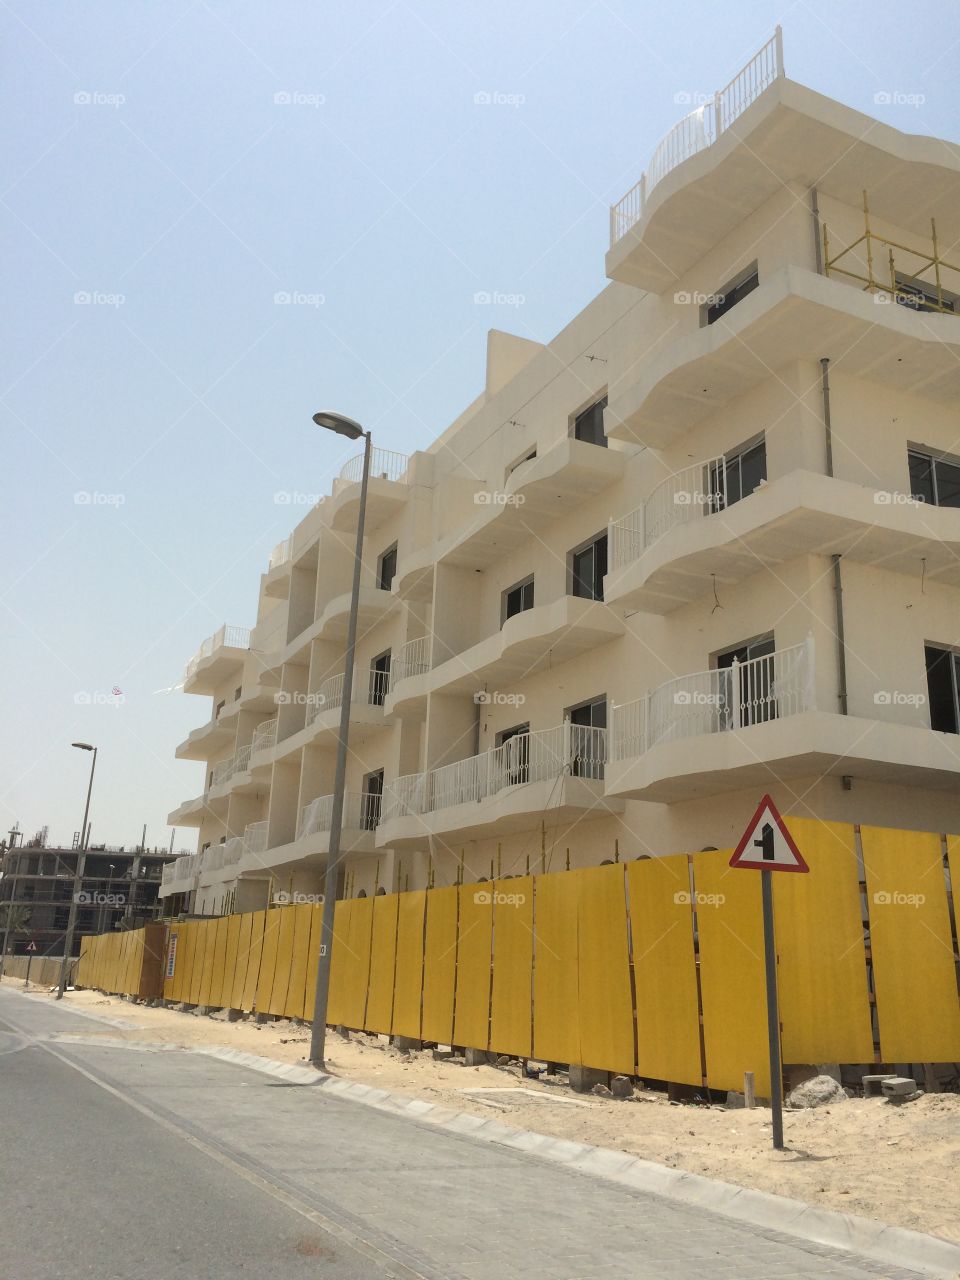 Dubai jumeirah village . Building in construction in dubai jumeirah village lolena project 